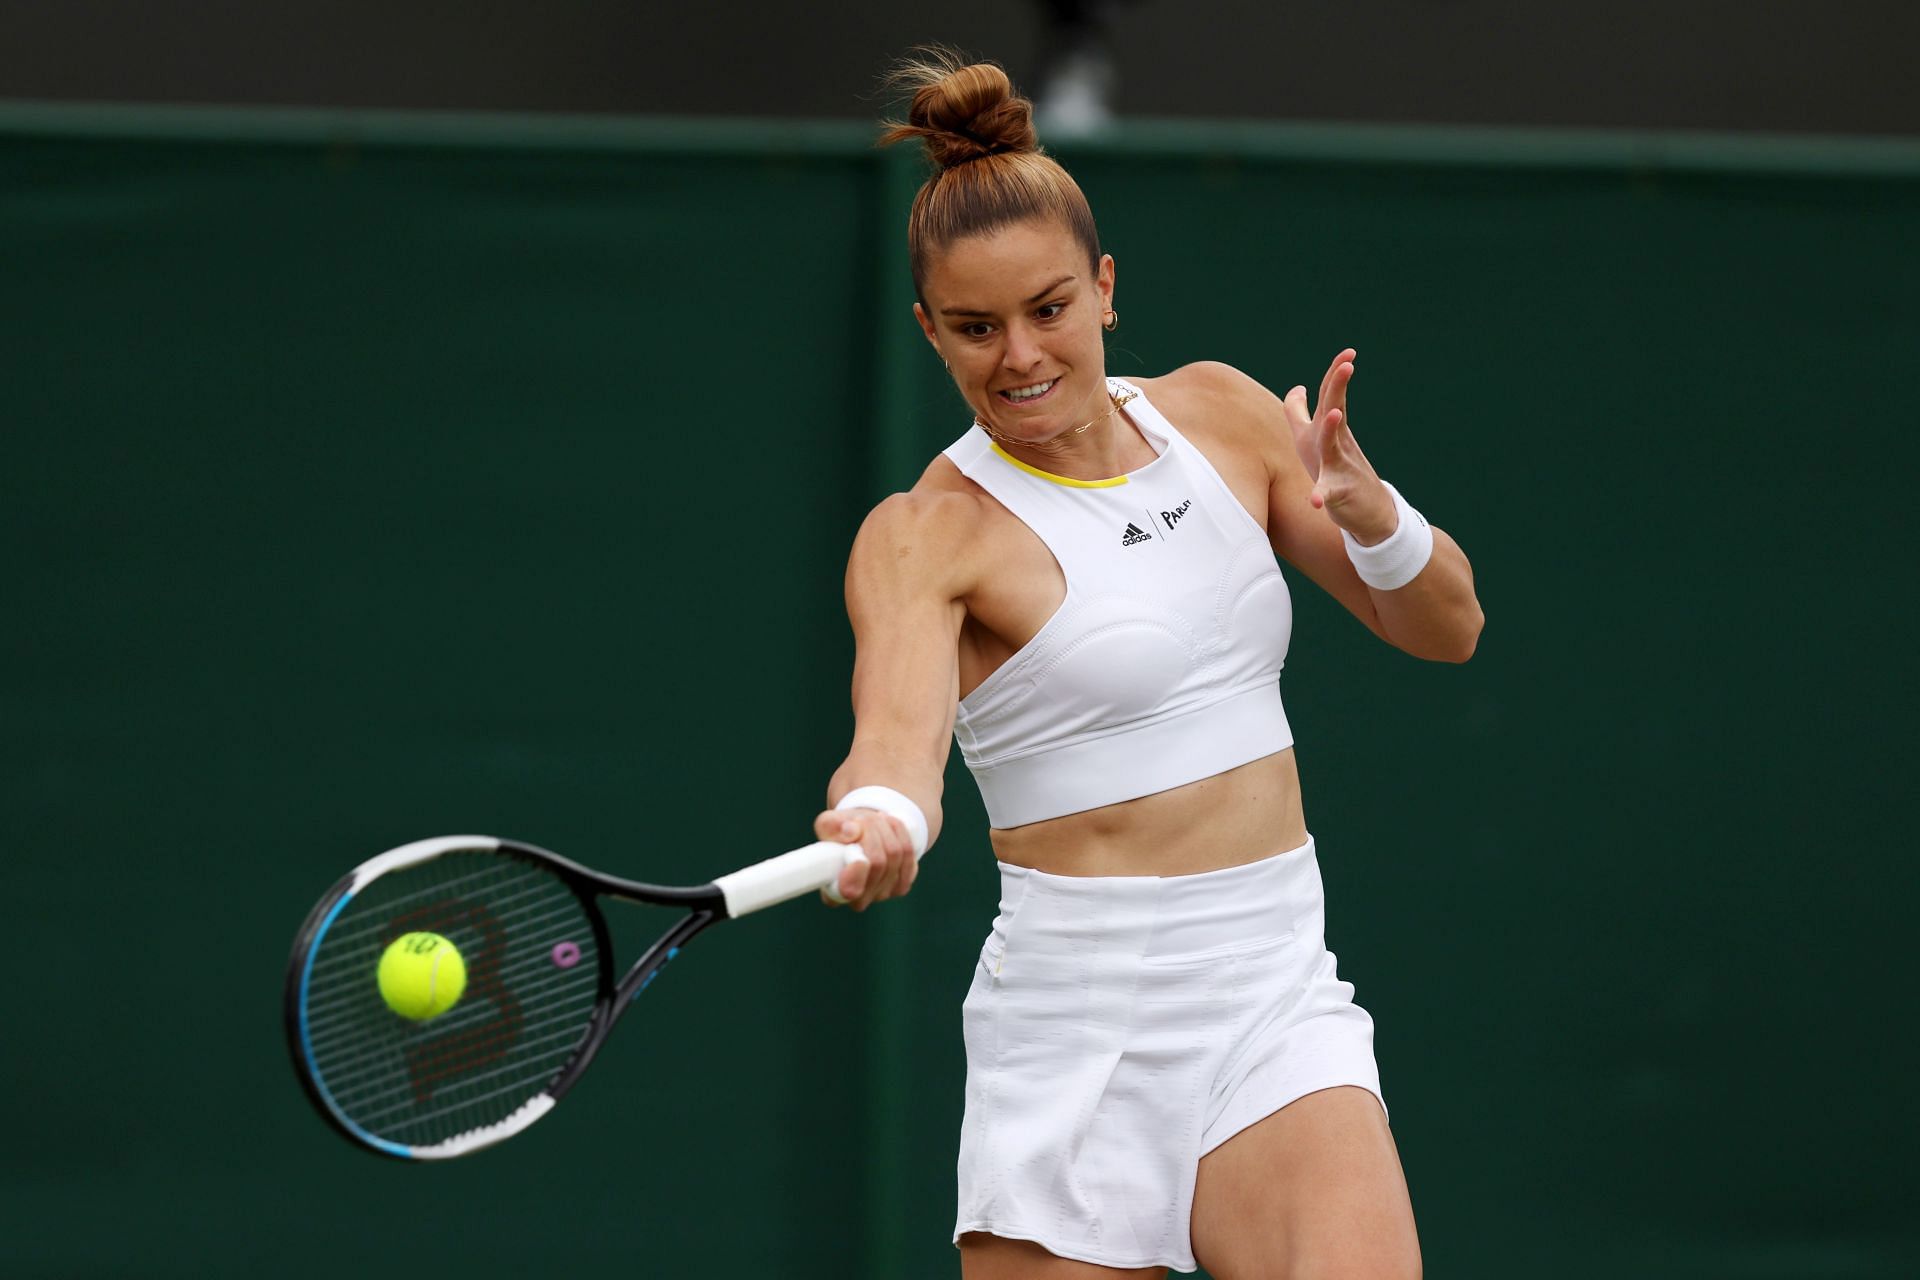 Maria Sakkari was eliminated in the third round of Wimbledon